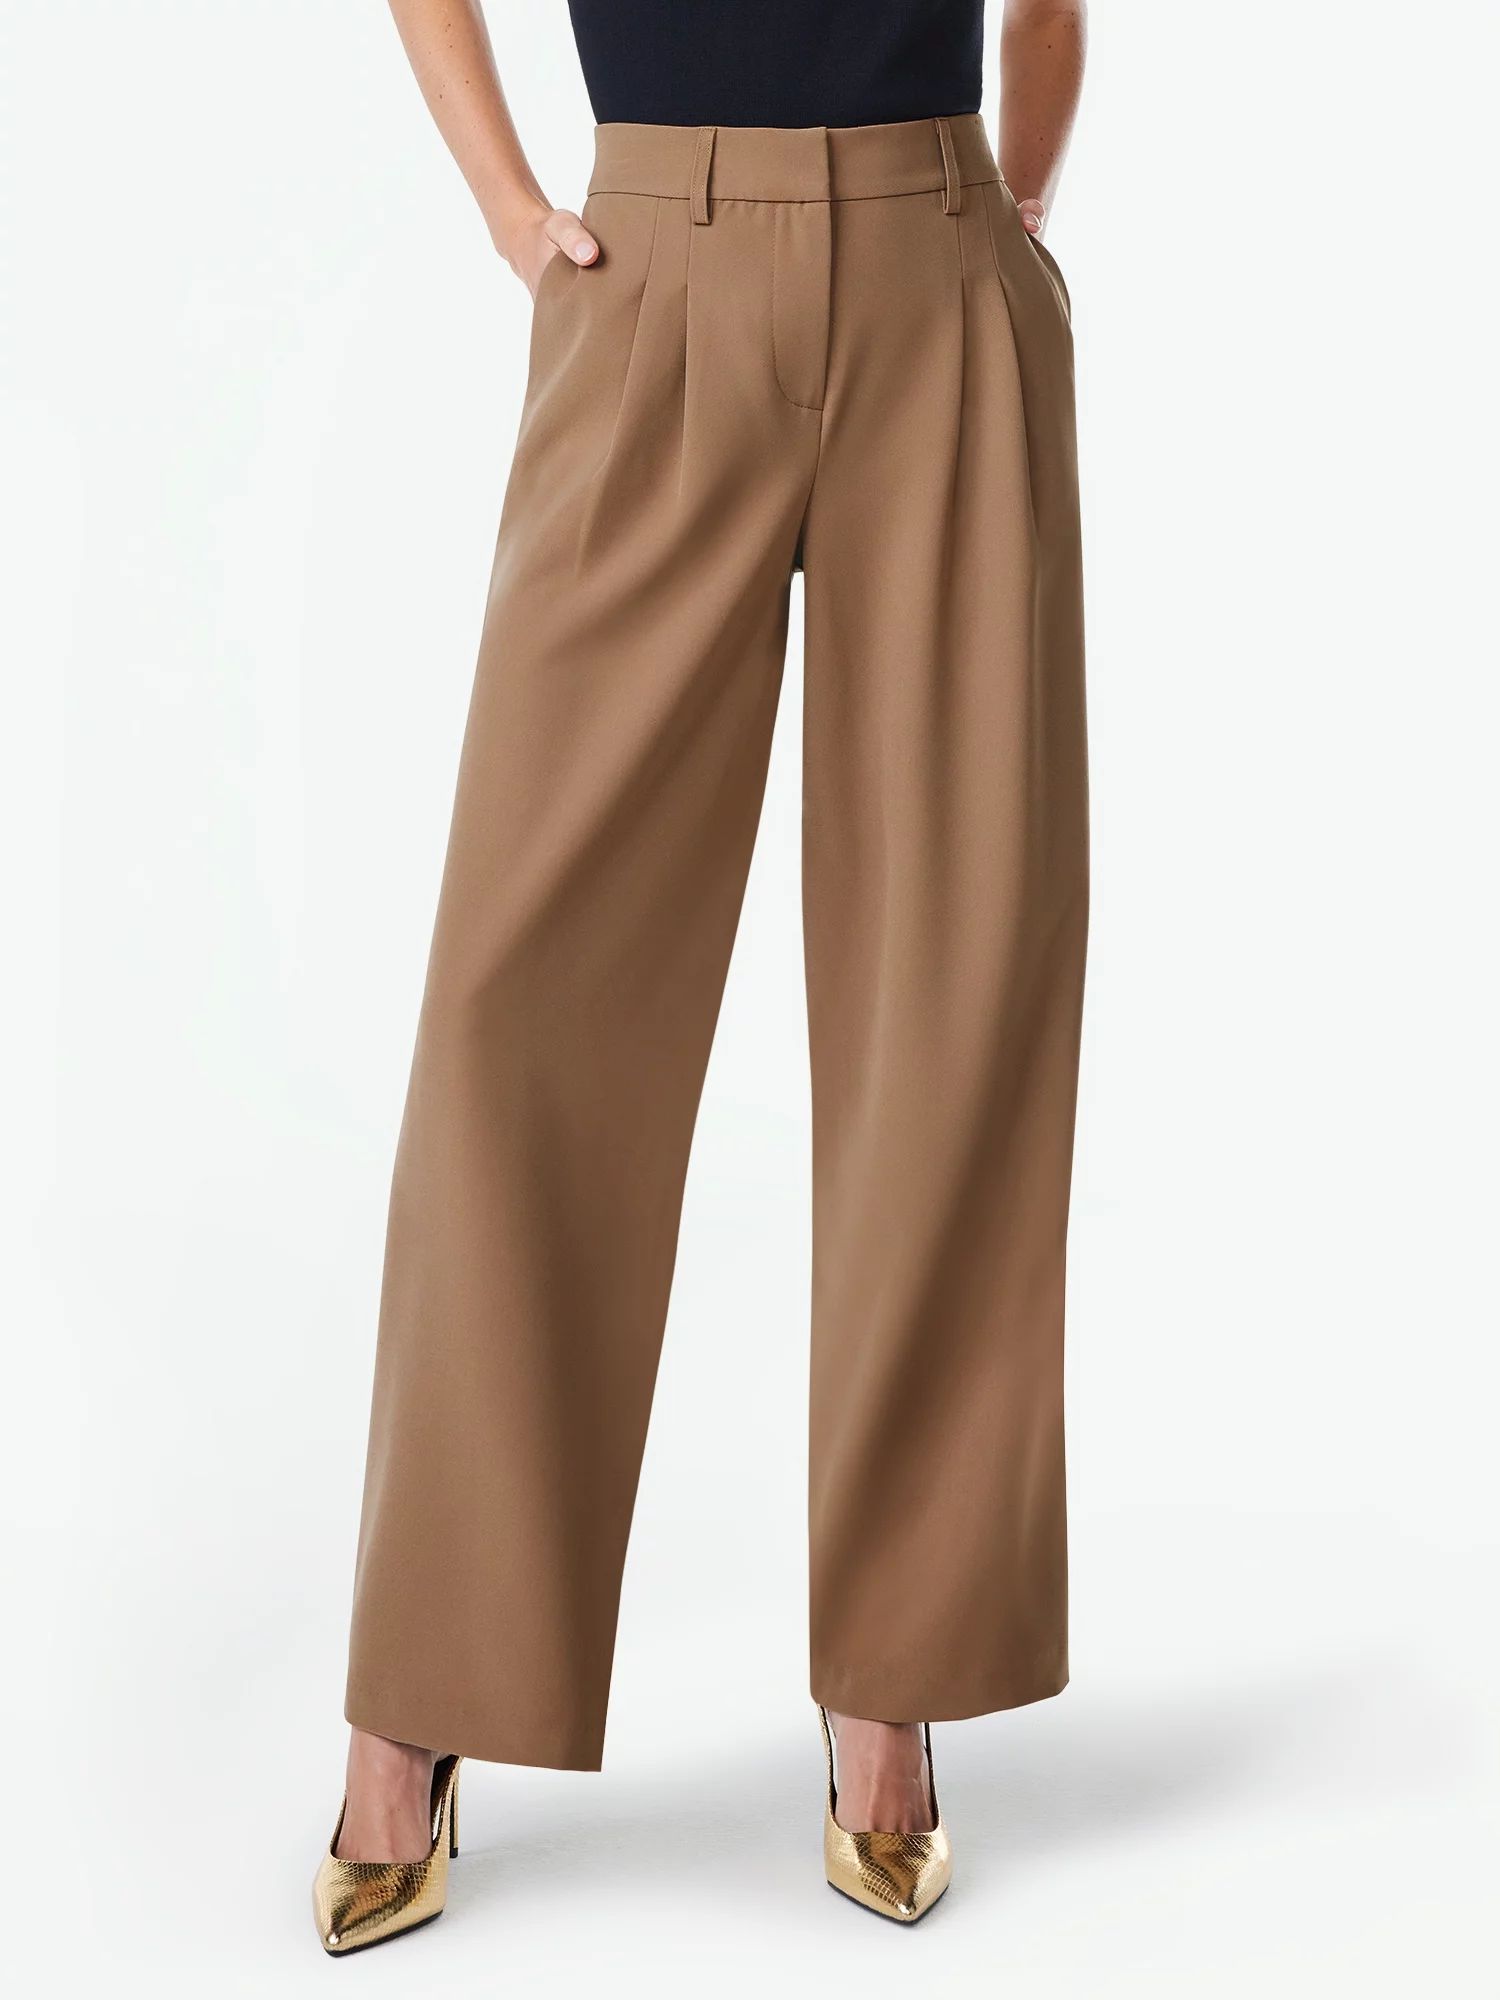 Scoop Women’s Wide Leg Trousers with Elastic Back Waist, Sizes XS-XXL | Walmart (US)